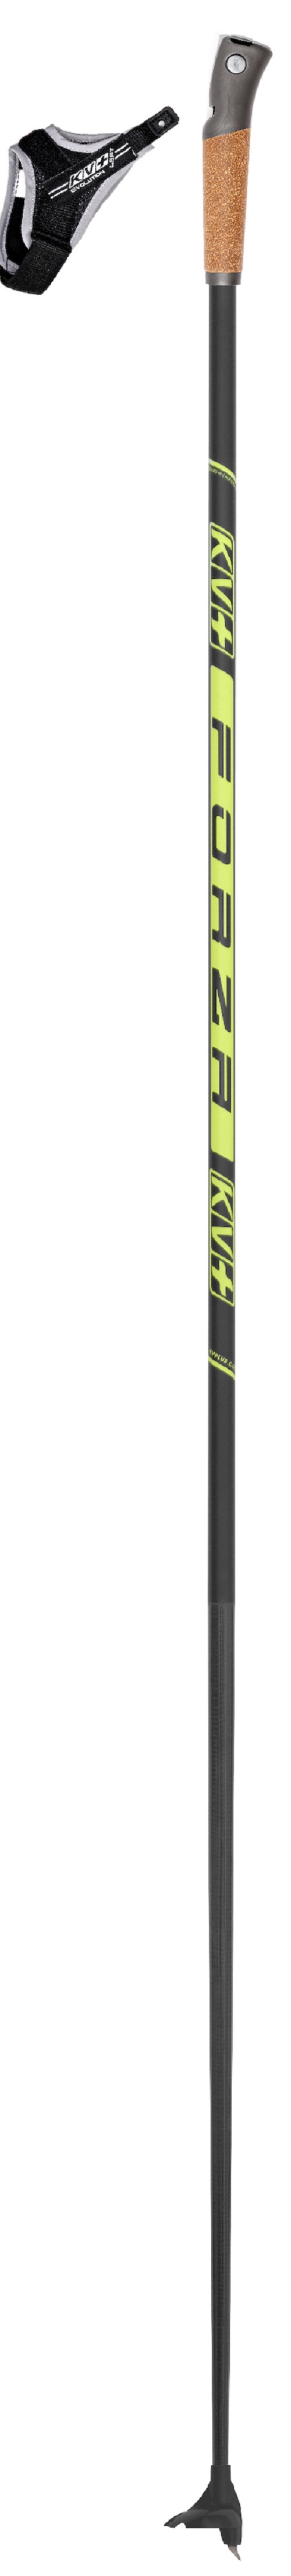 Лыжные палки KV+ Forza Clip cross country pole Yellow, 22P016Y 145